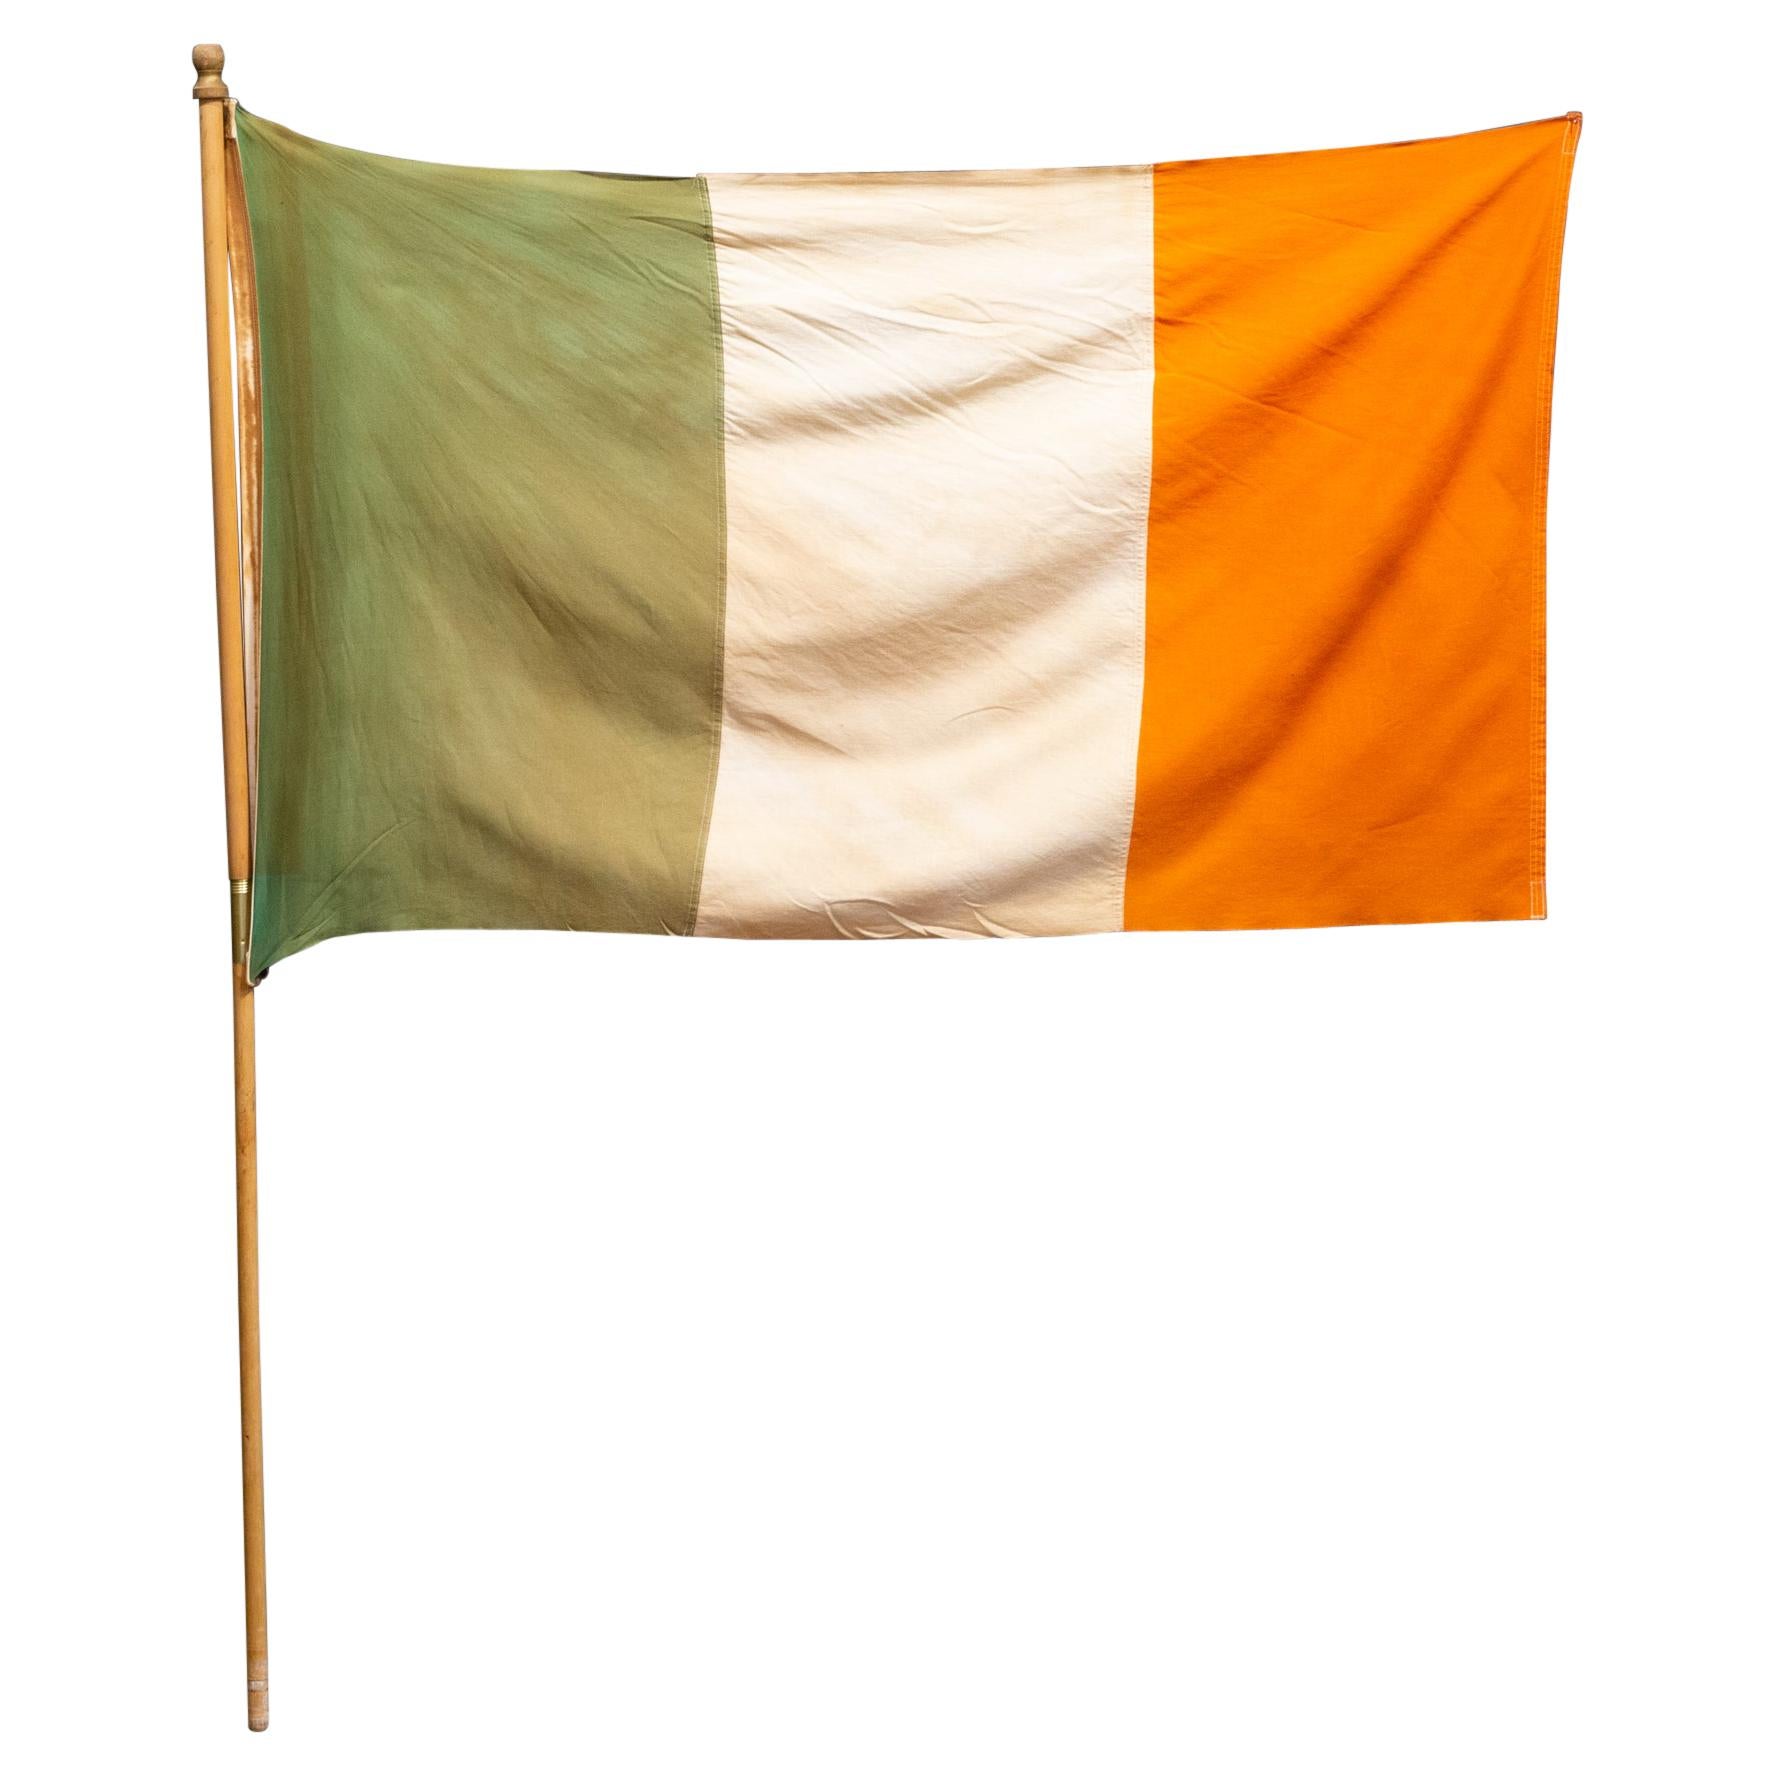 Early 20th C. Irish Flag, c.1950